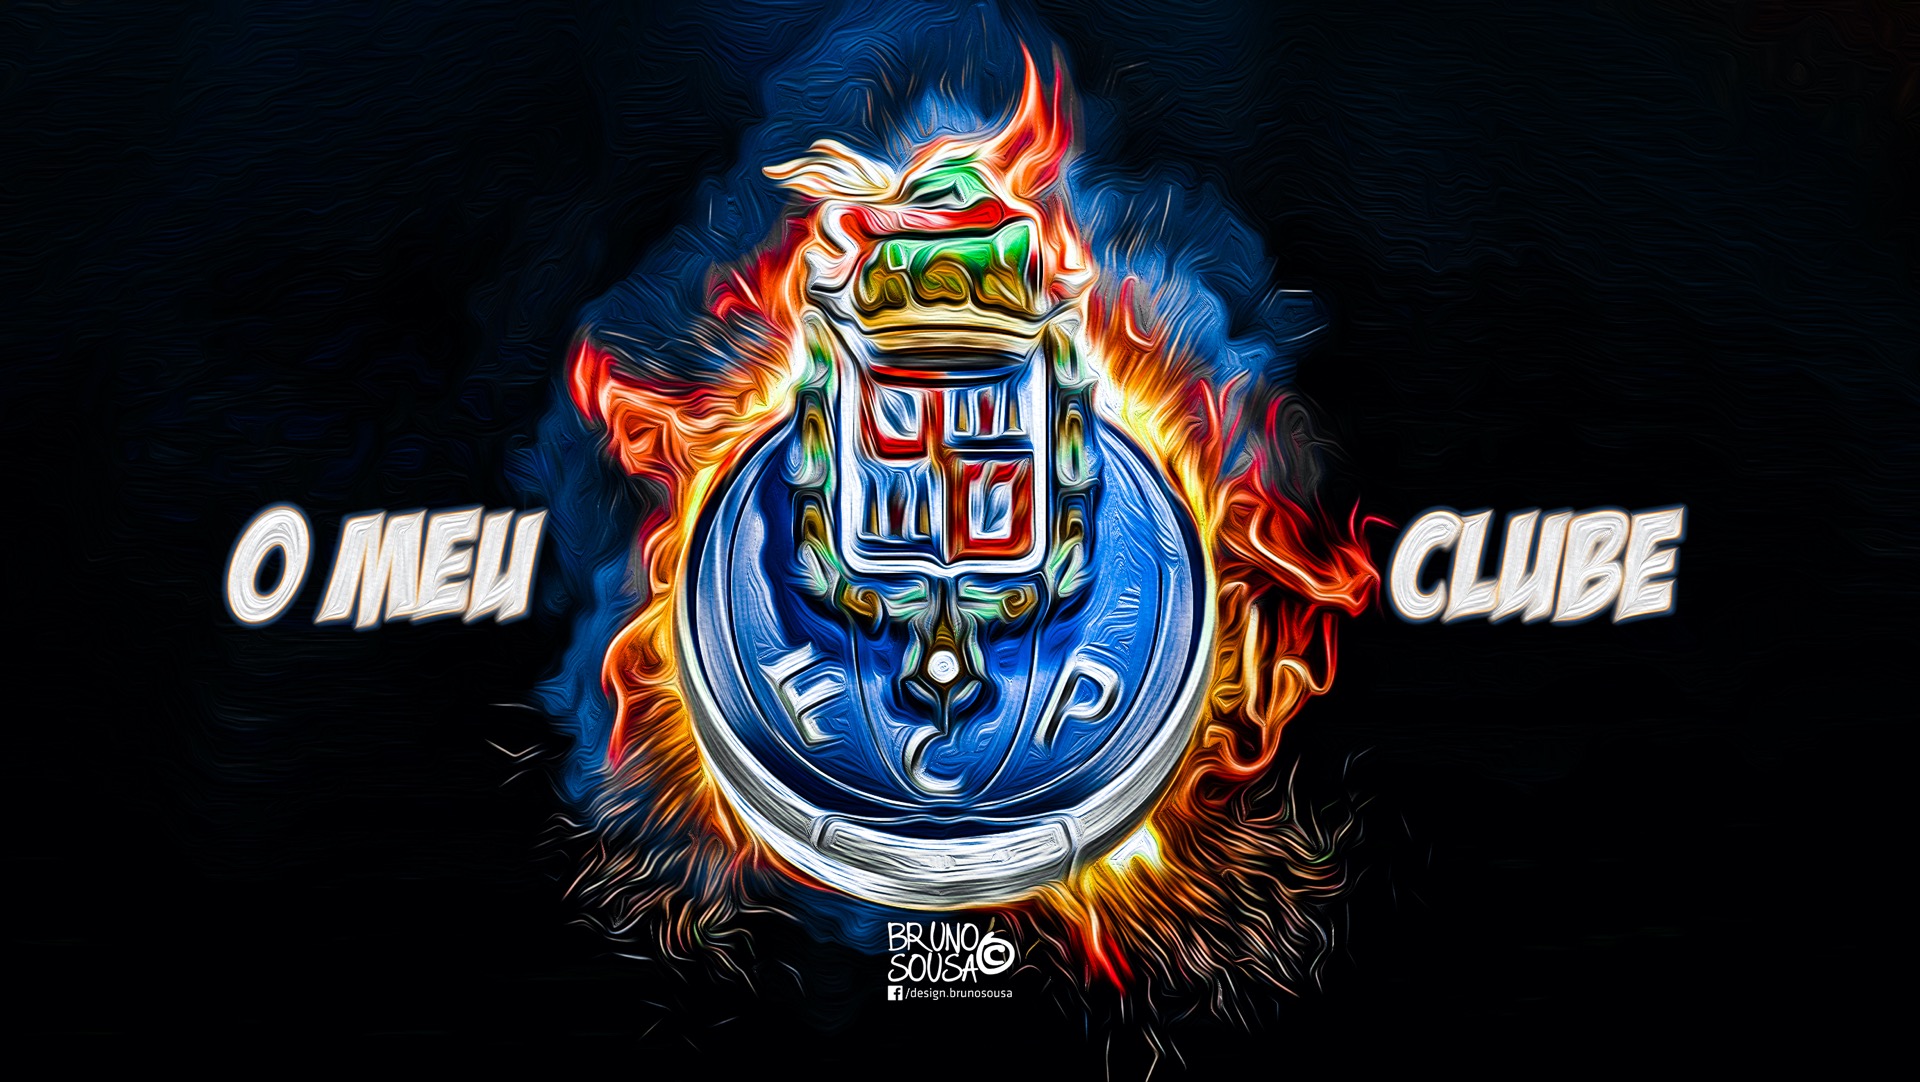 FC Porto - O meu clube